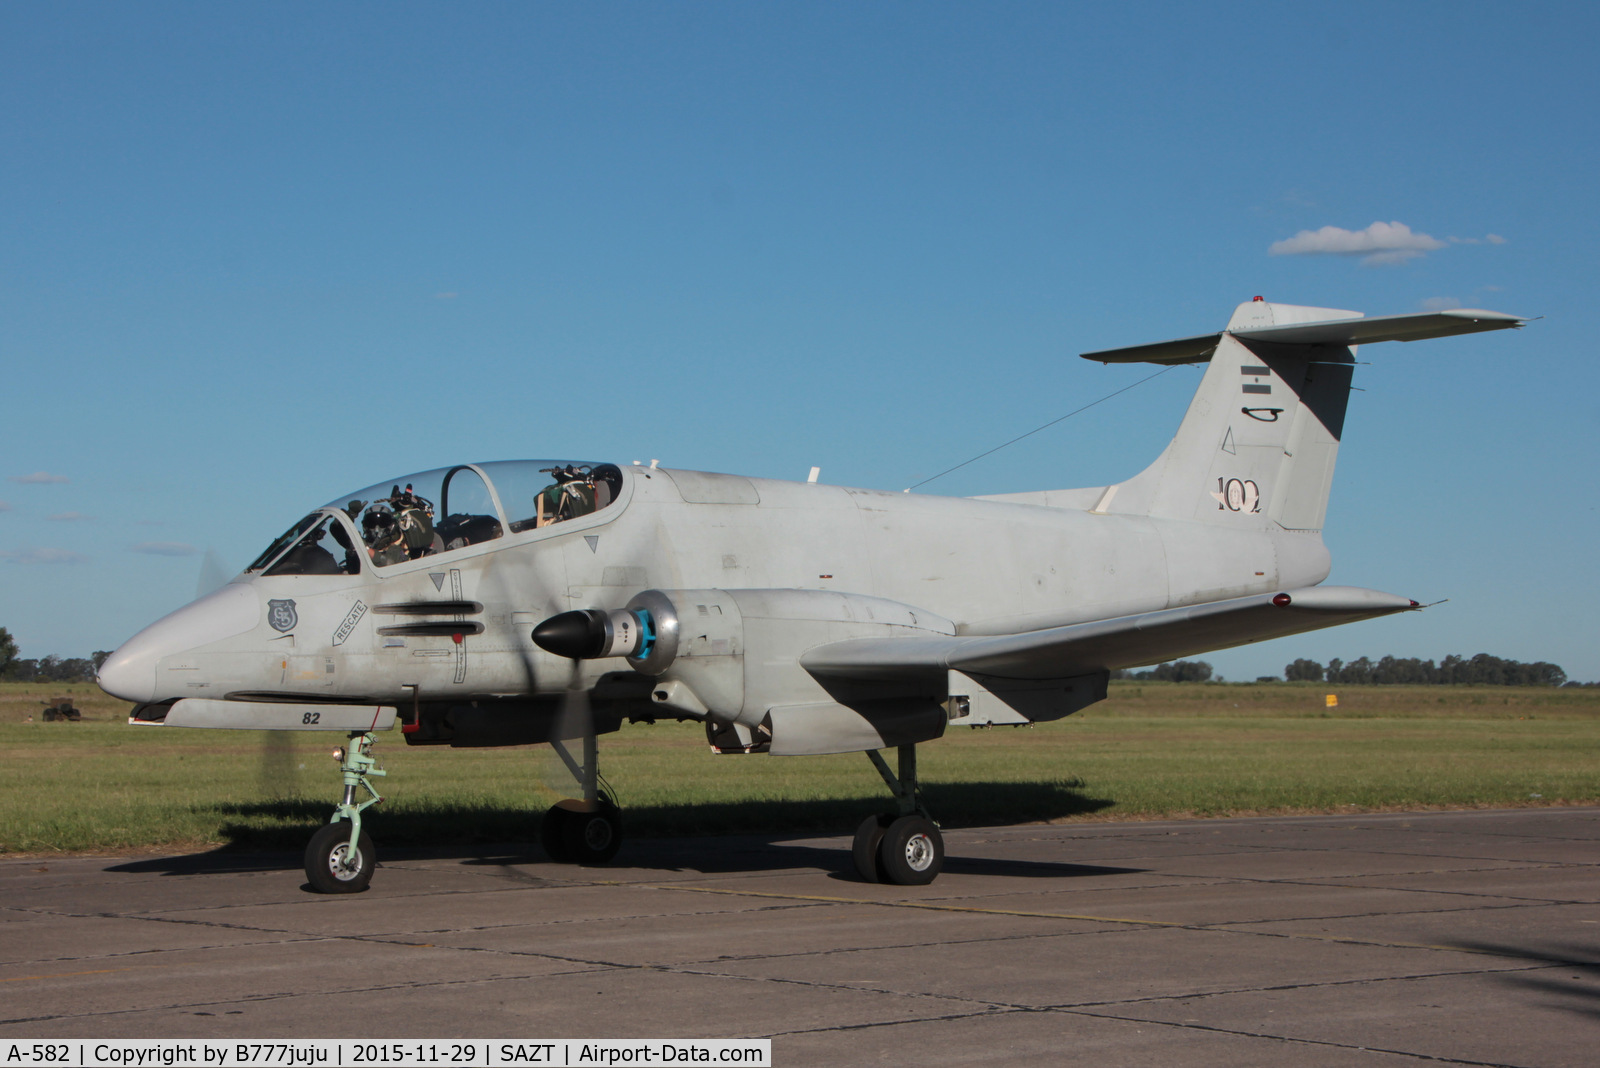 A-582, FMA IA-58D Pucará C/N 083, at Tandil